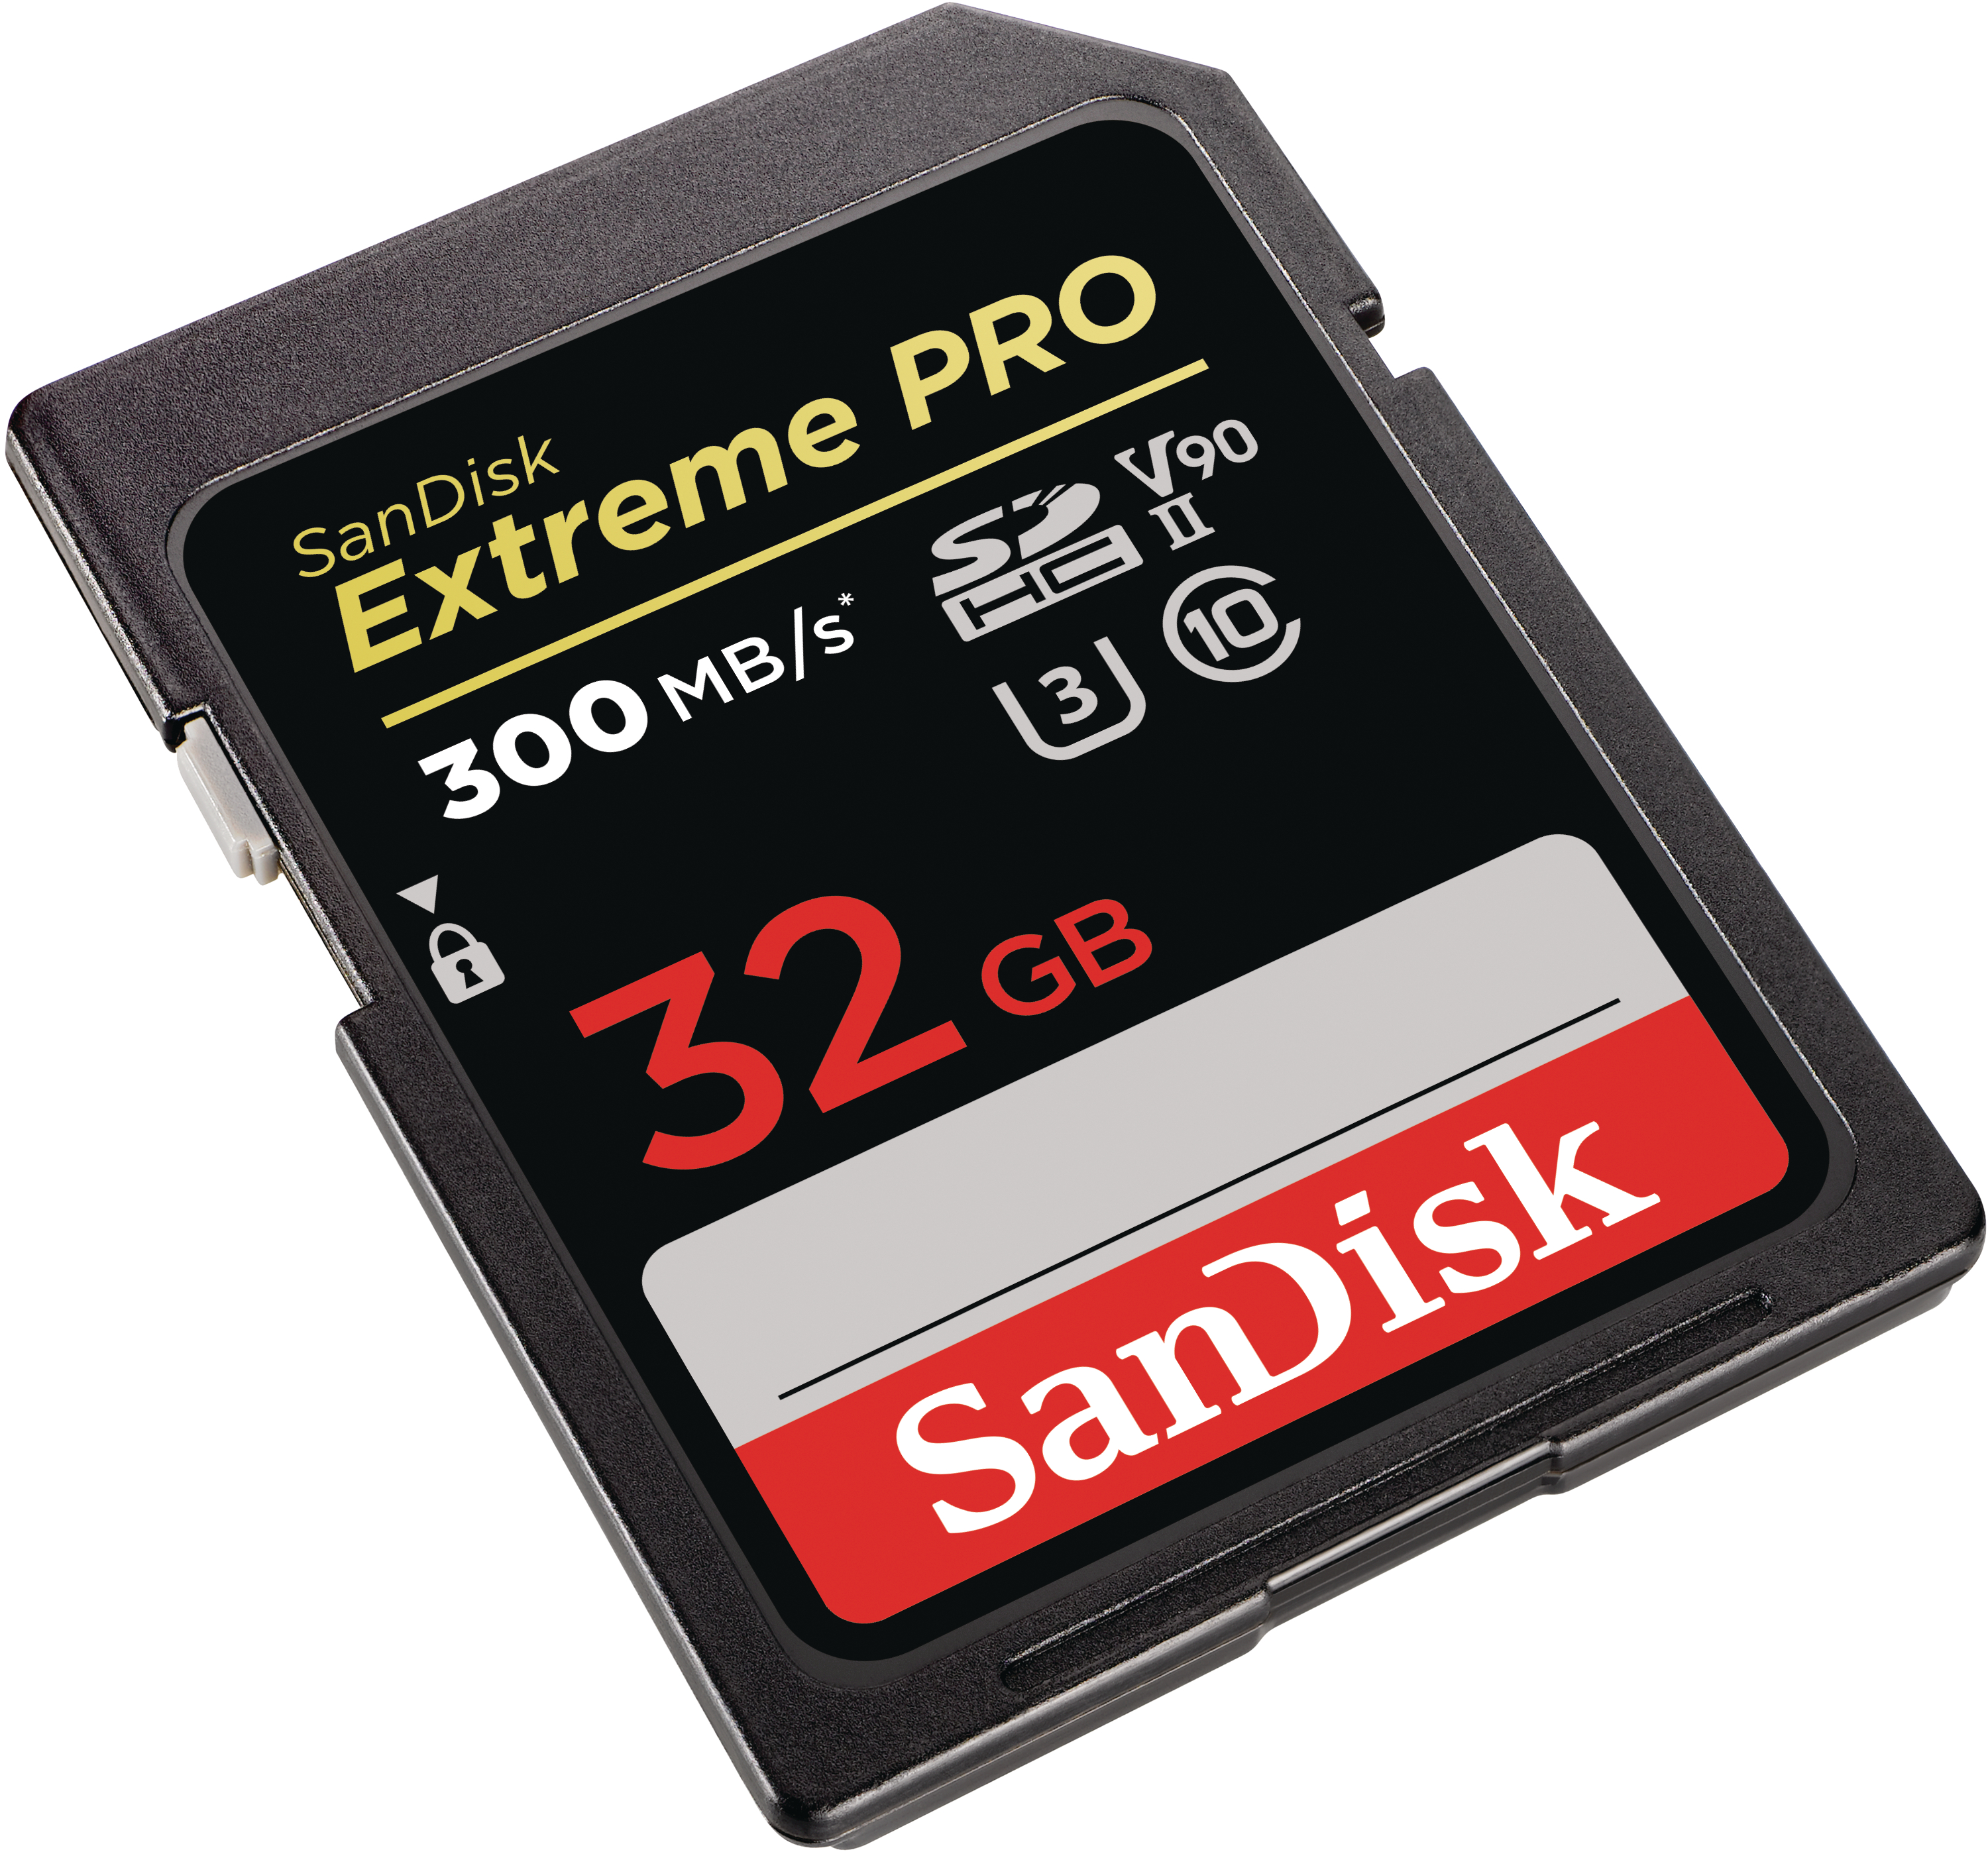 SANDISK Extreme PRO®, SDHC 300 Speicherkarte, MB/s GB, 32